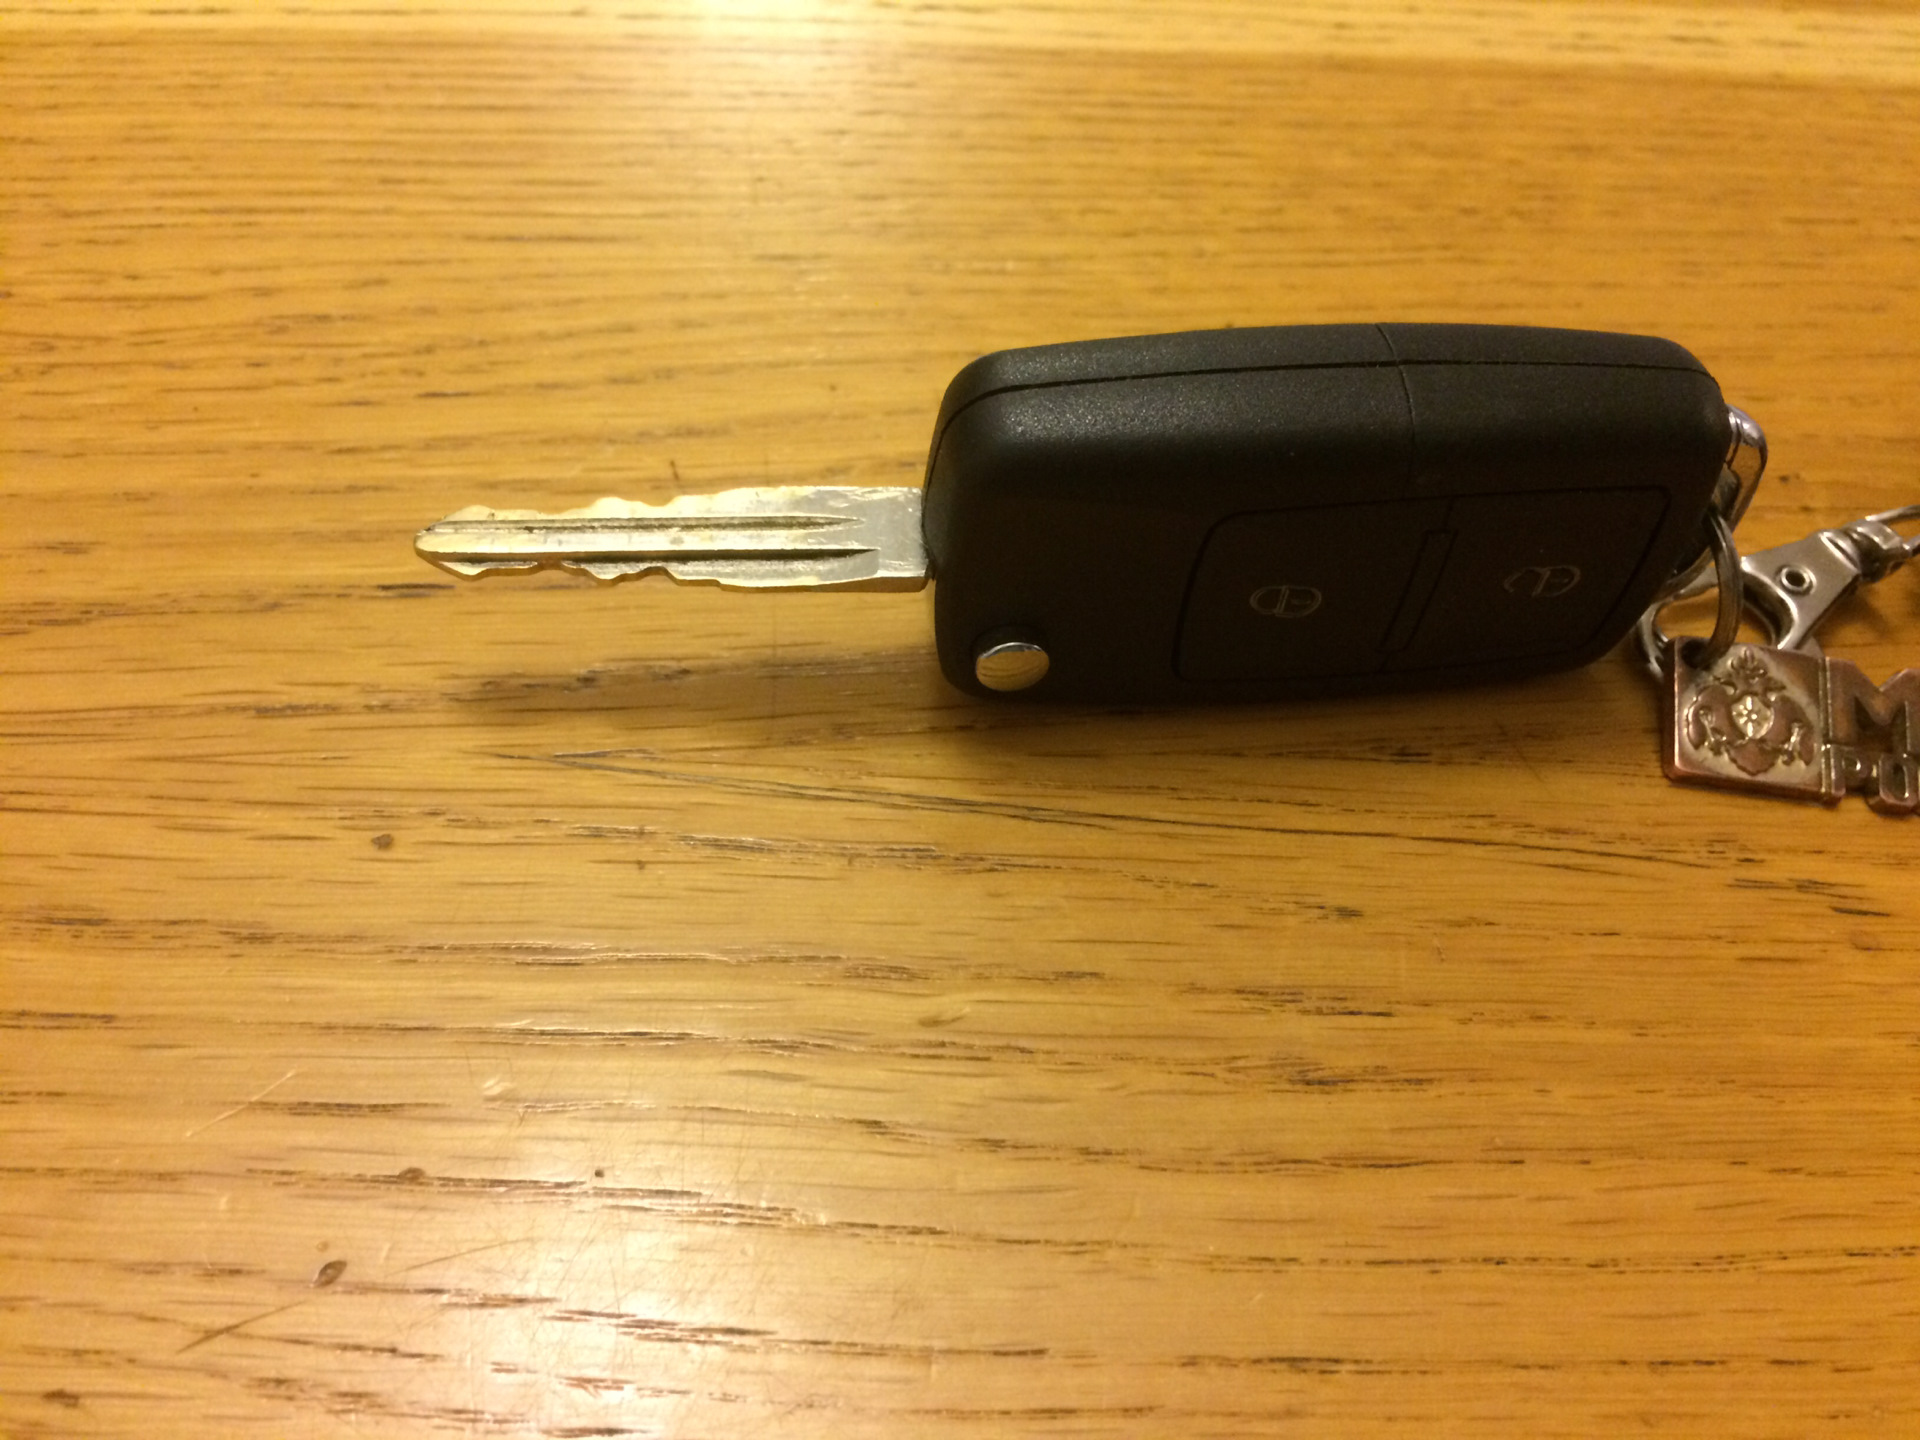 Ключ ховер н5. Ключ зажигания Hover h5. Корпус выкидной ключ для автомобиля Ховер н2. Выкидной ключ для great Wall Hover h2. Ключ зажигания Ховер н5.